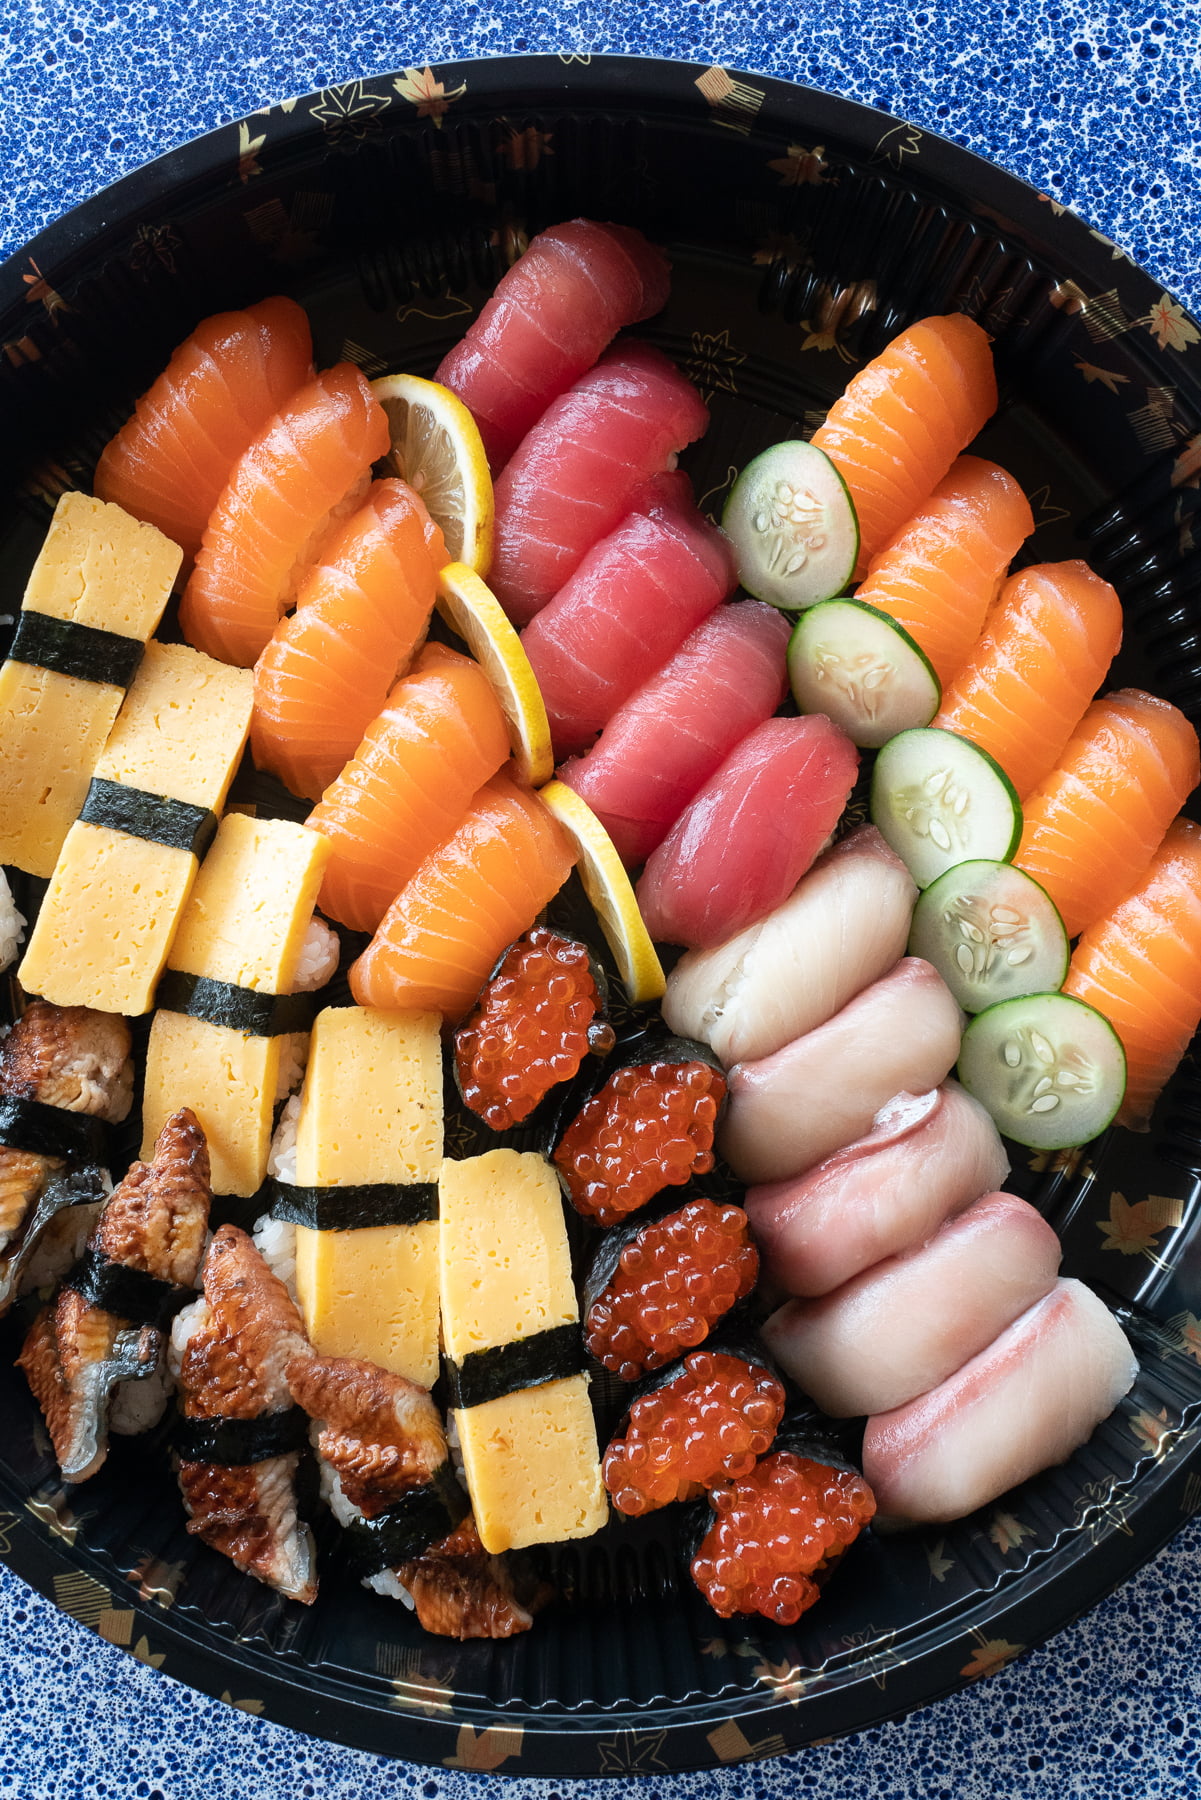 A sushi platter from Hawaii Sushi.